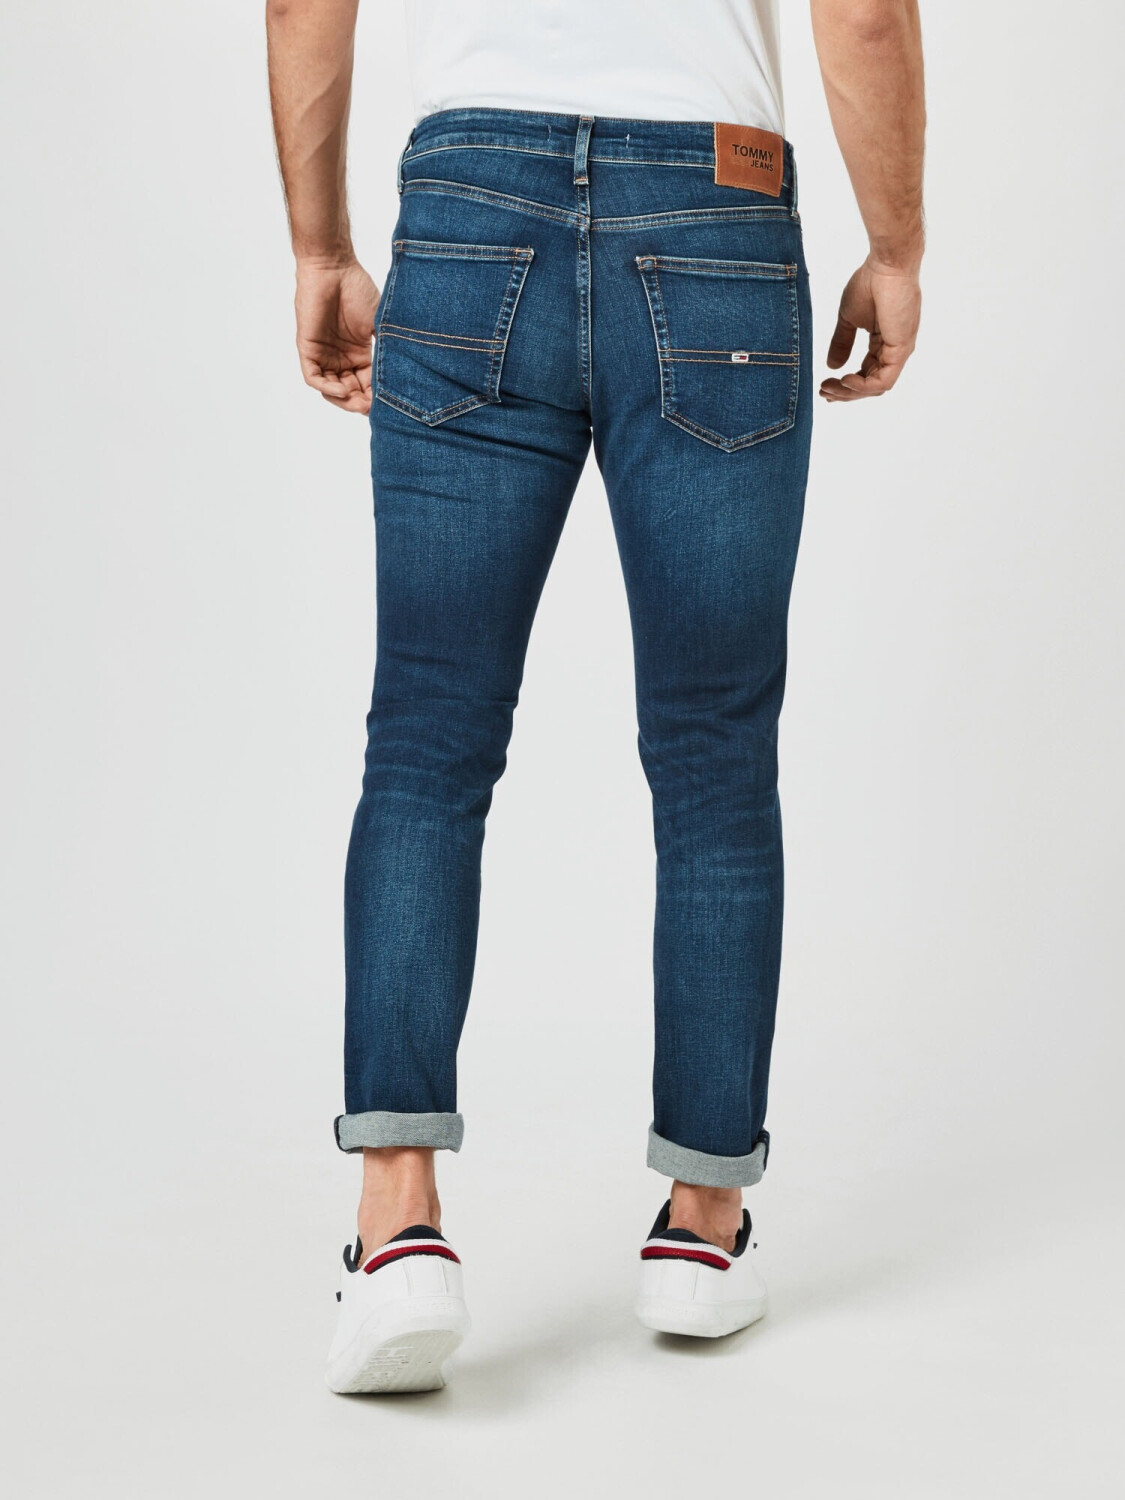 Buy Tommy Hilfiger Man Jeans Scanton aspen dark blue stretch from £32. ...